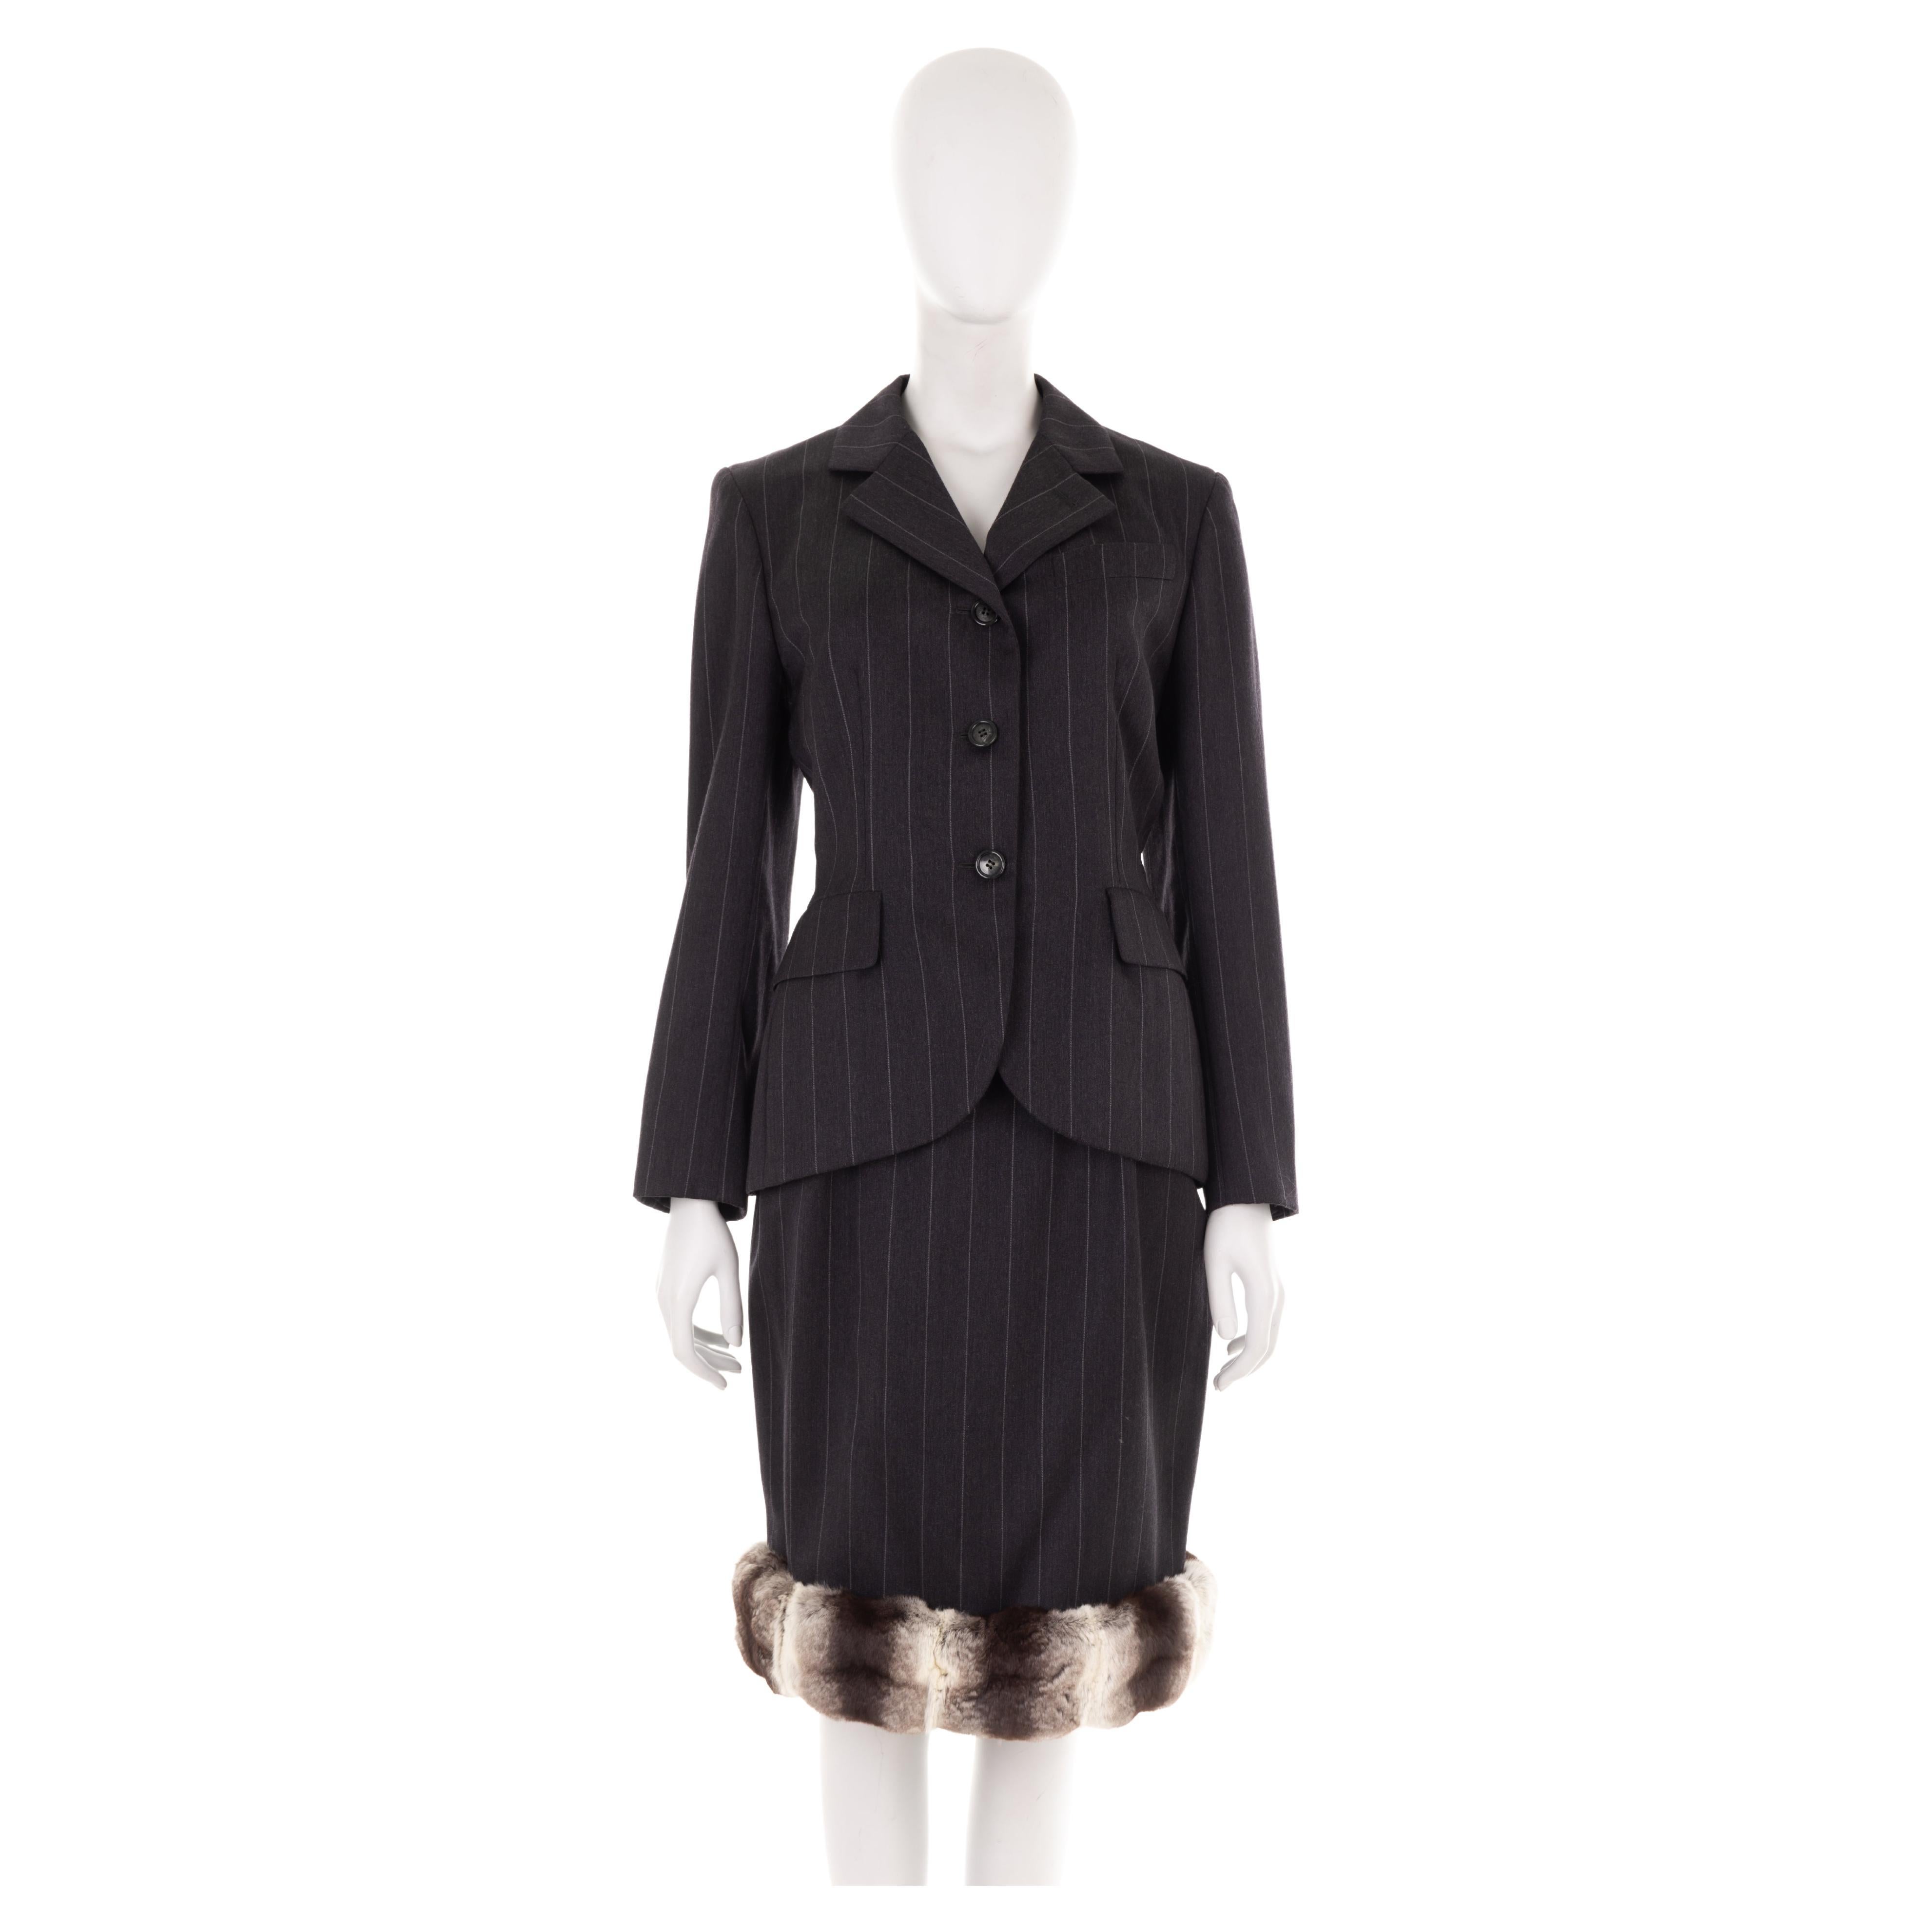 Christian Dior by Marc Bohan F/W 1987 grey pinstripe Chinchilla fur skirt suit For Sale